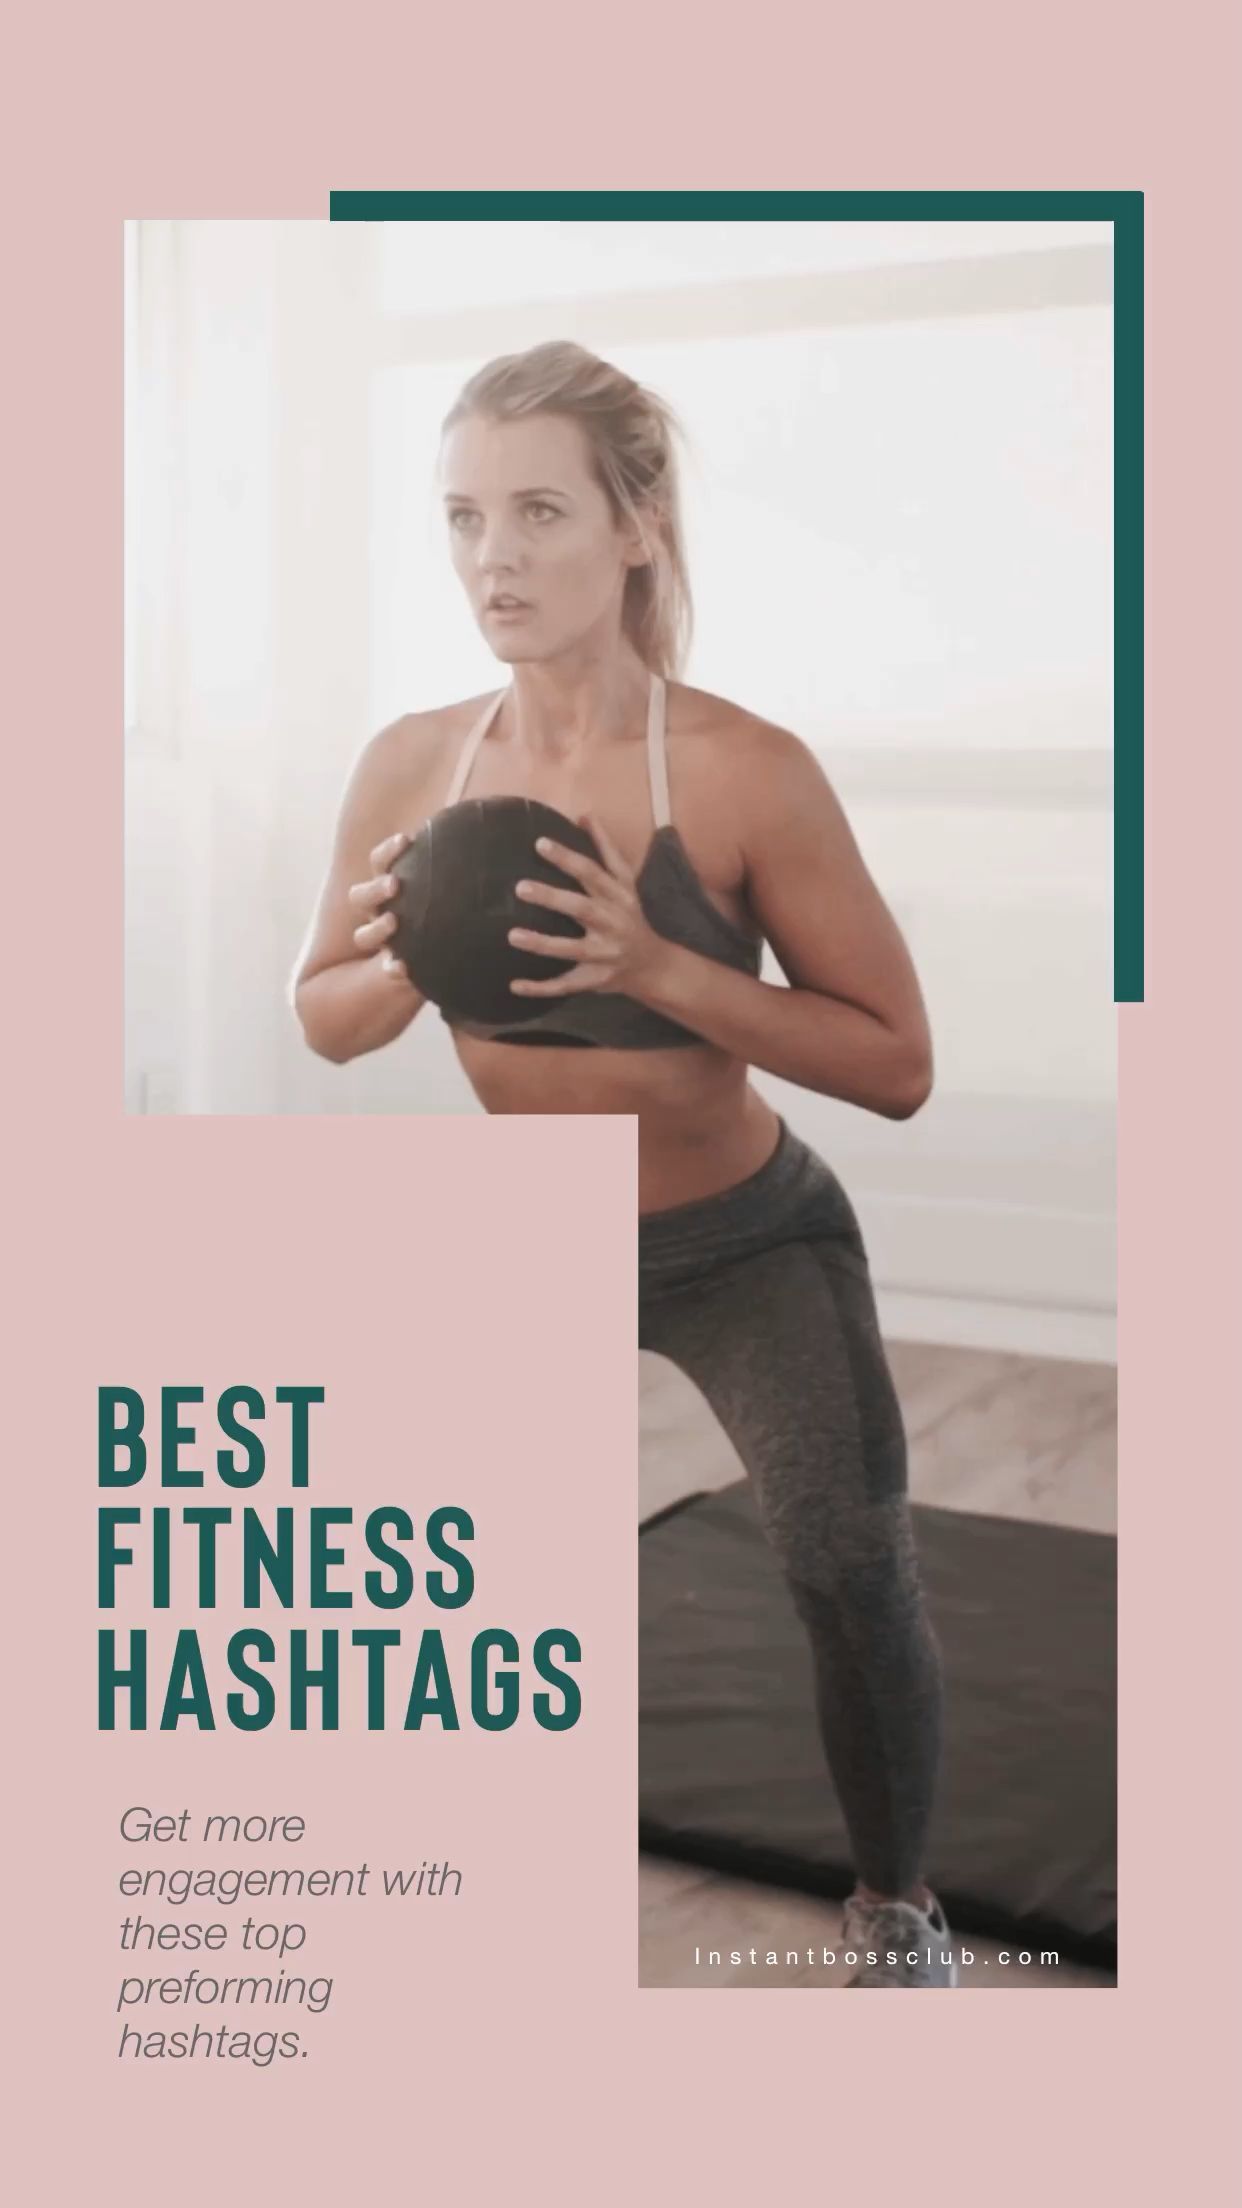 Best fitness hashtags of 2019 - Best fitness hashtags of 2019 -   19 fitness Instagram hashtags ideas